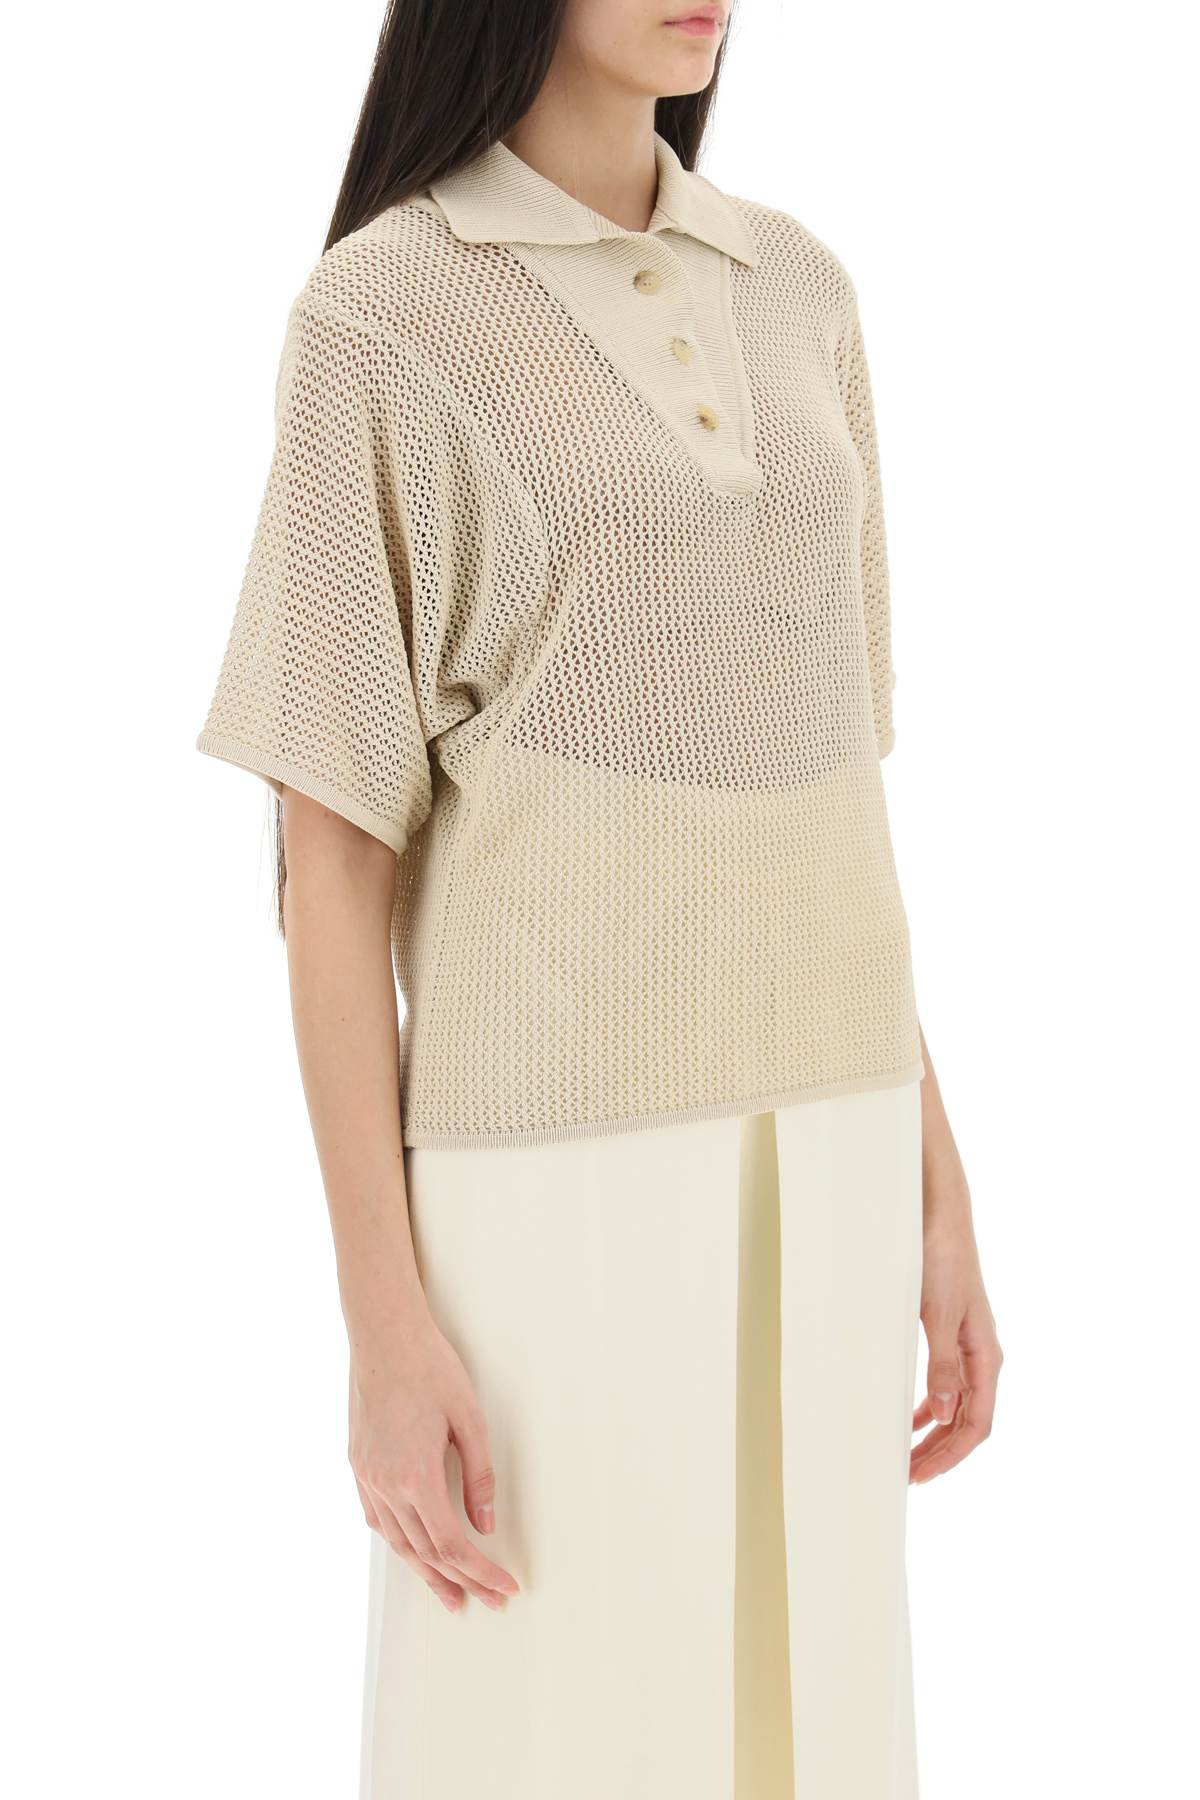 Mvp wardrobe 'pfeiffer' stretch knit polo shirt-1